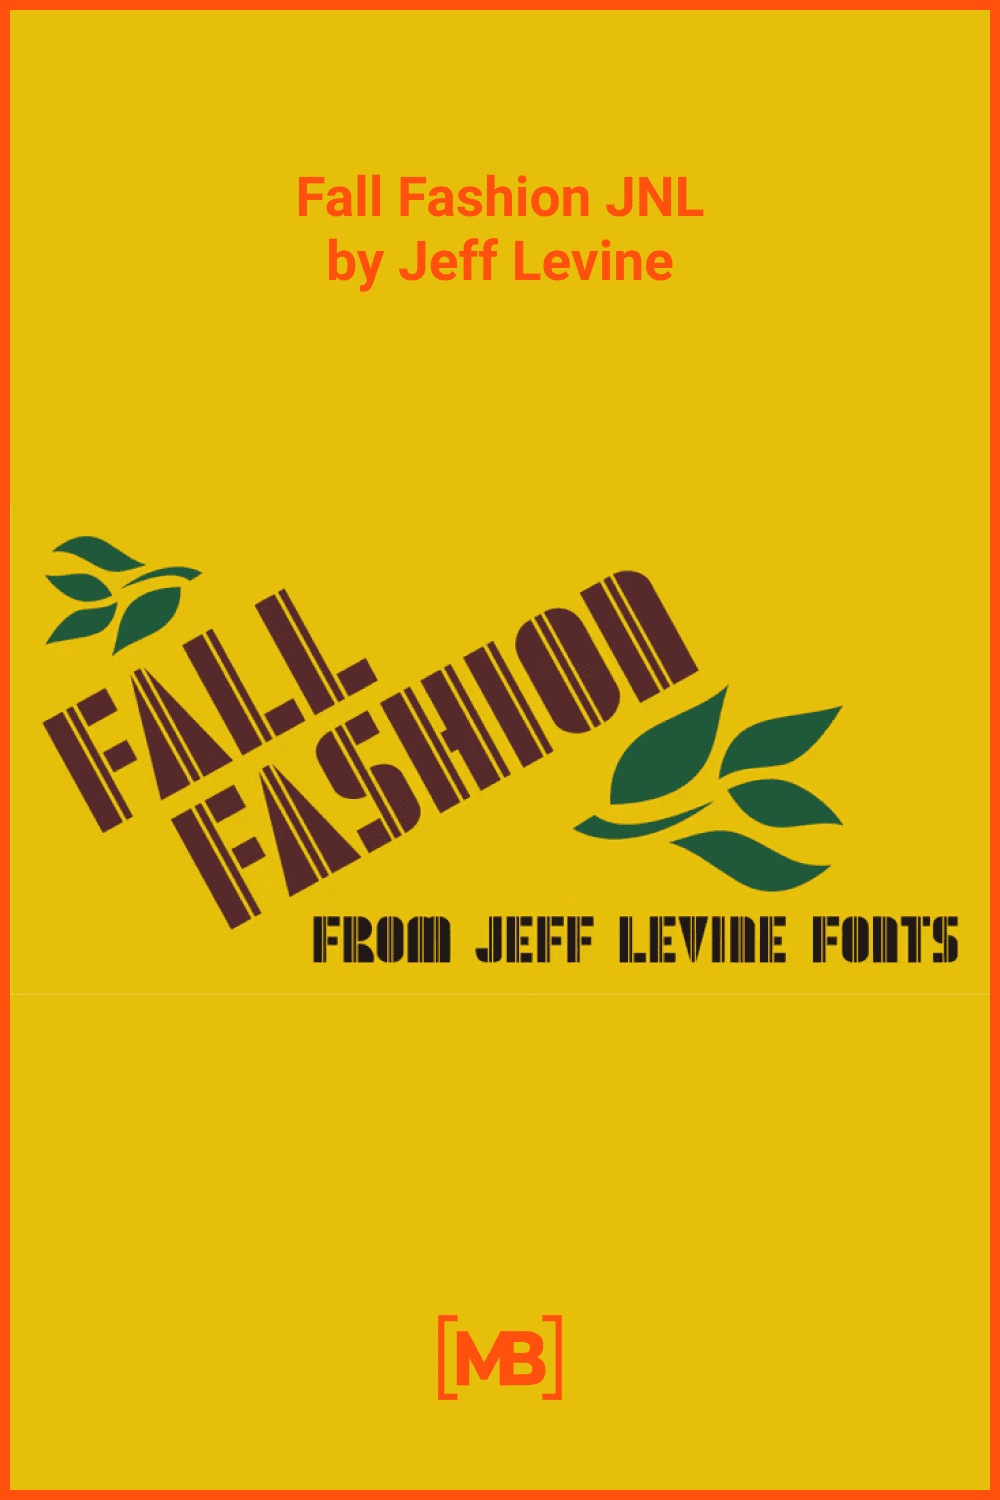 Fall fashion JNL by Jeff Levine.